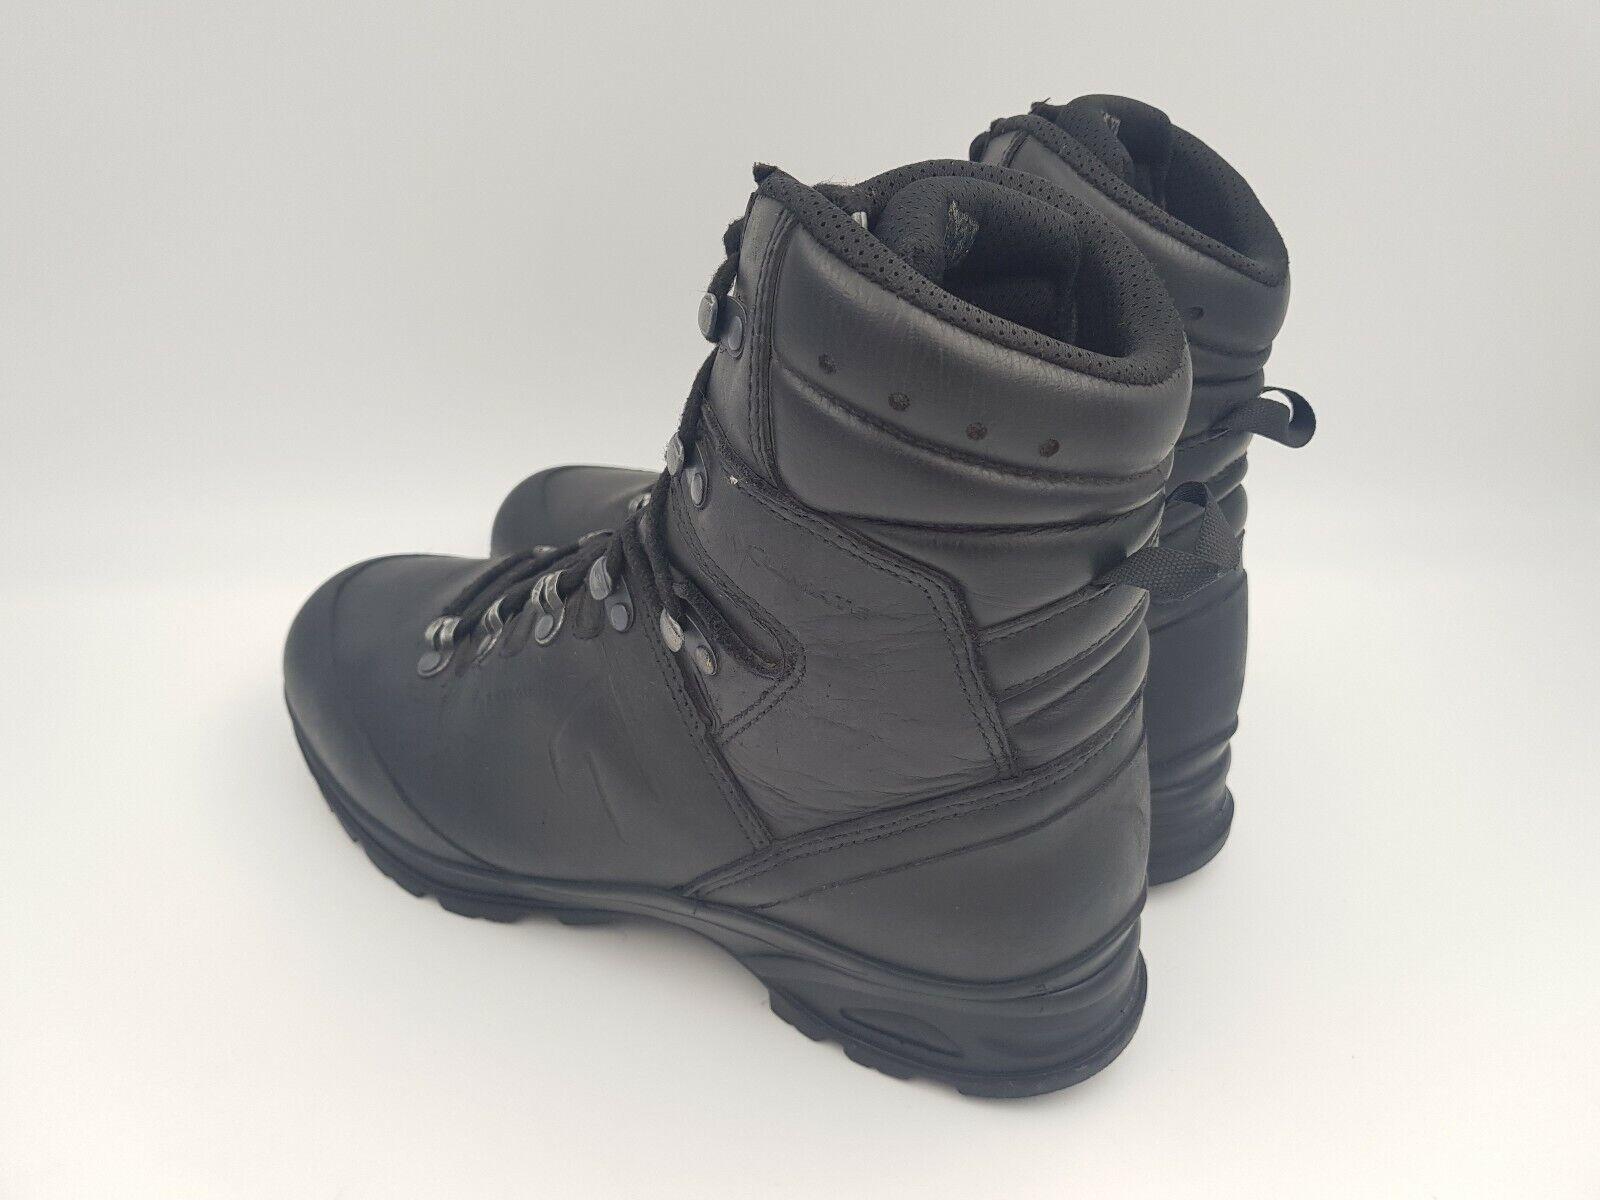 Haix Black Combat Boots Grade 1 (Used)